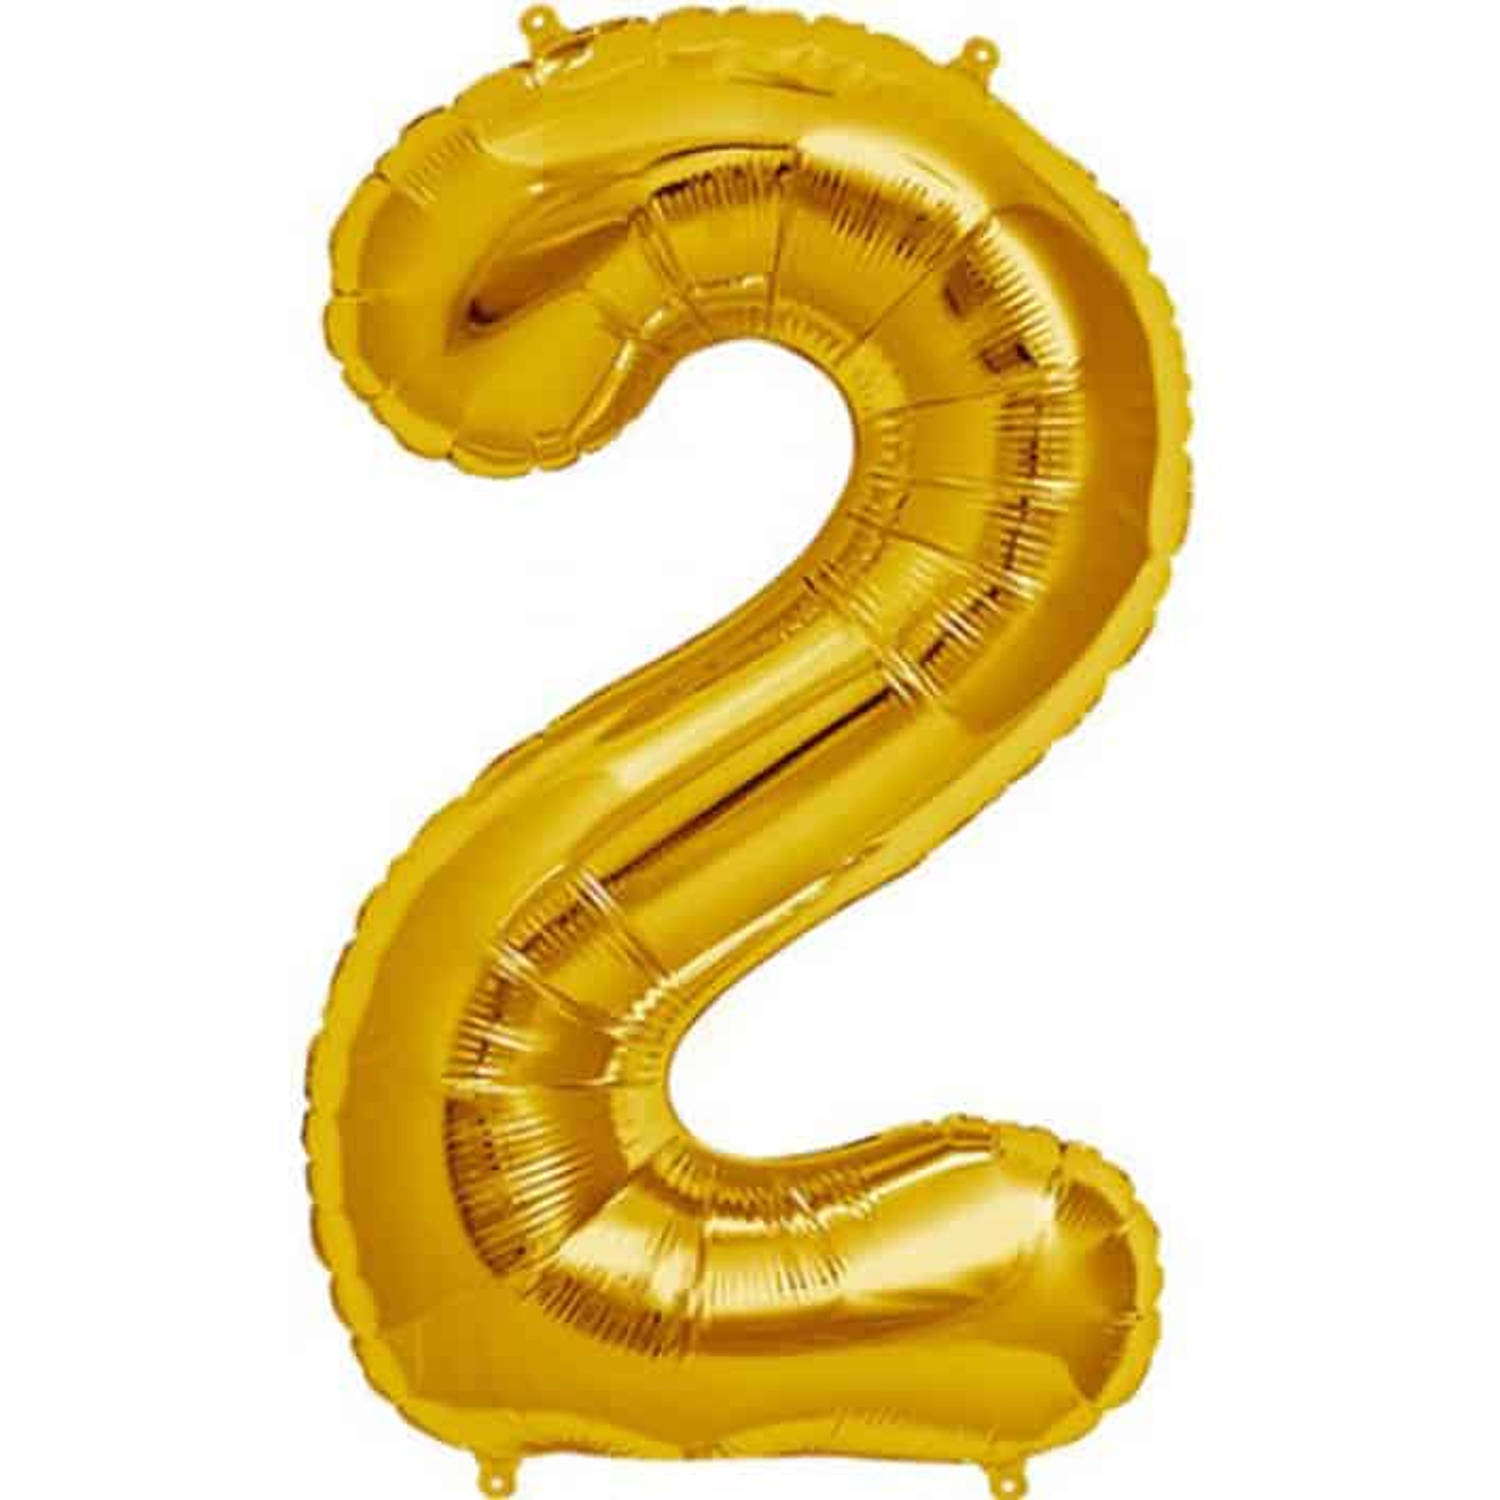 Folat Folie cijfer ballon - 86 cm goud - cijfer 2 - verjaardag leeftijd